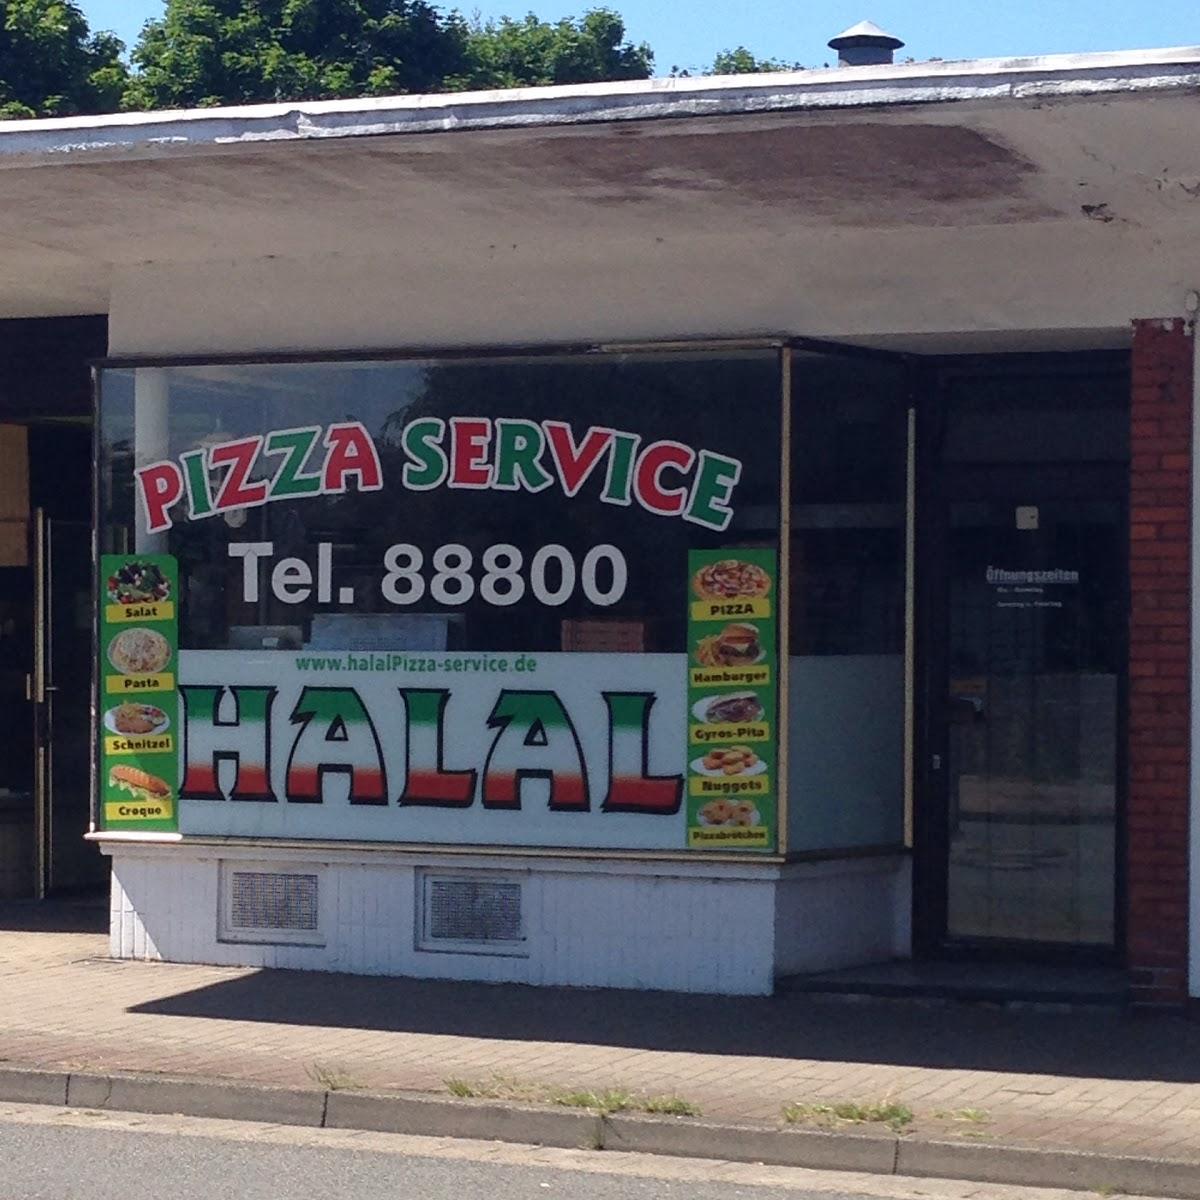 Restaurant "Halal Pizza Service" in Stade